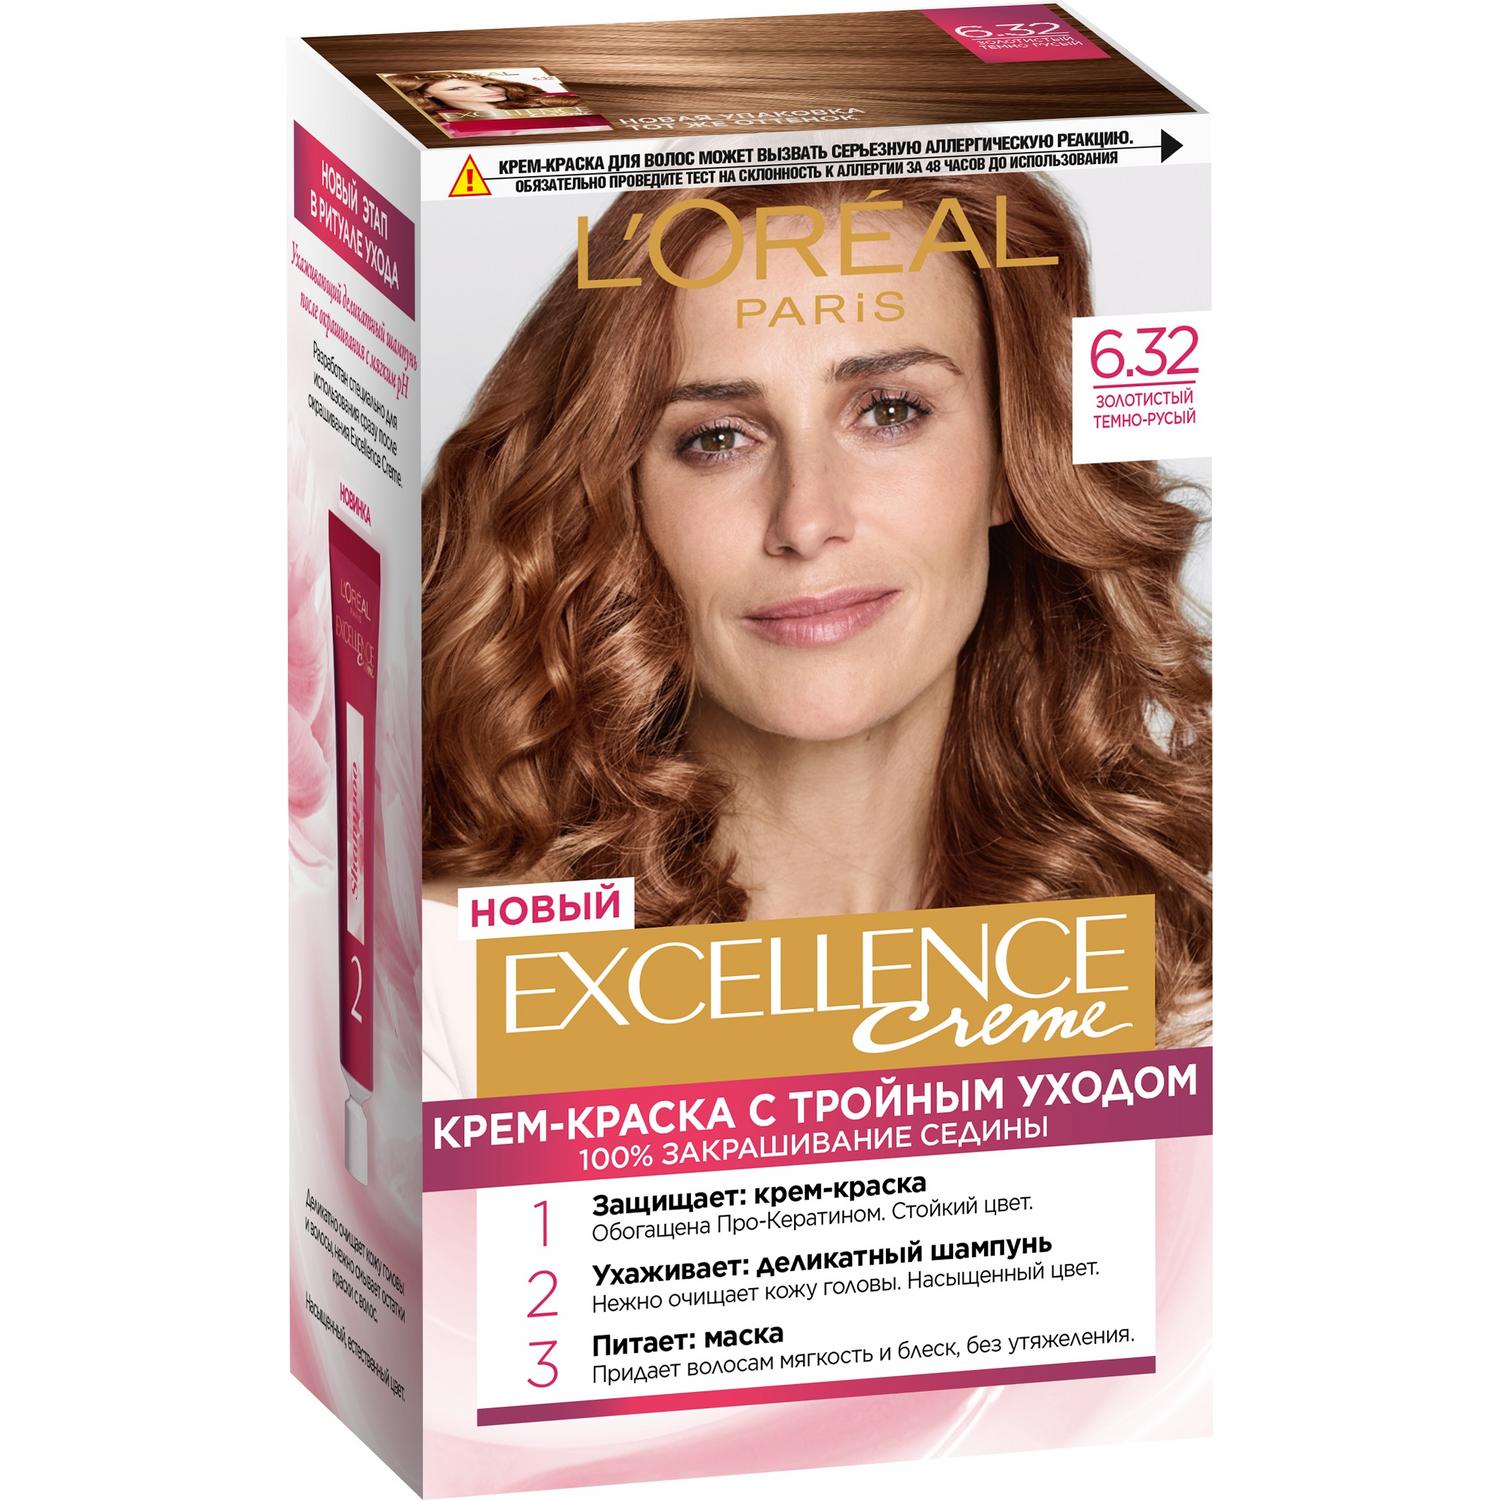 Краска L’Oreal Excellence Creme 6.32 Золотистый темно-русый (A7140325) краска для волос l oreal paris casting creme gloss 300 двойной эспрессо